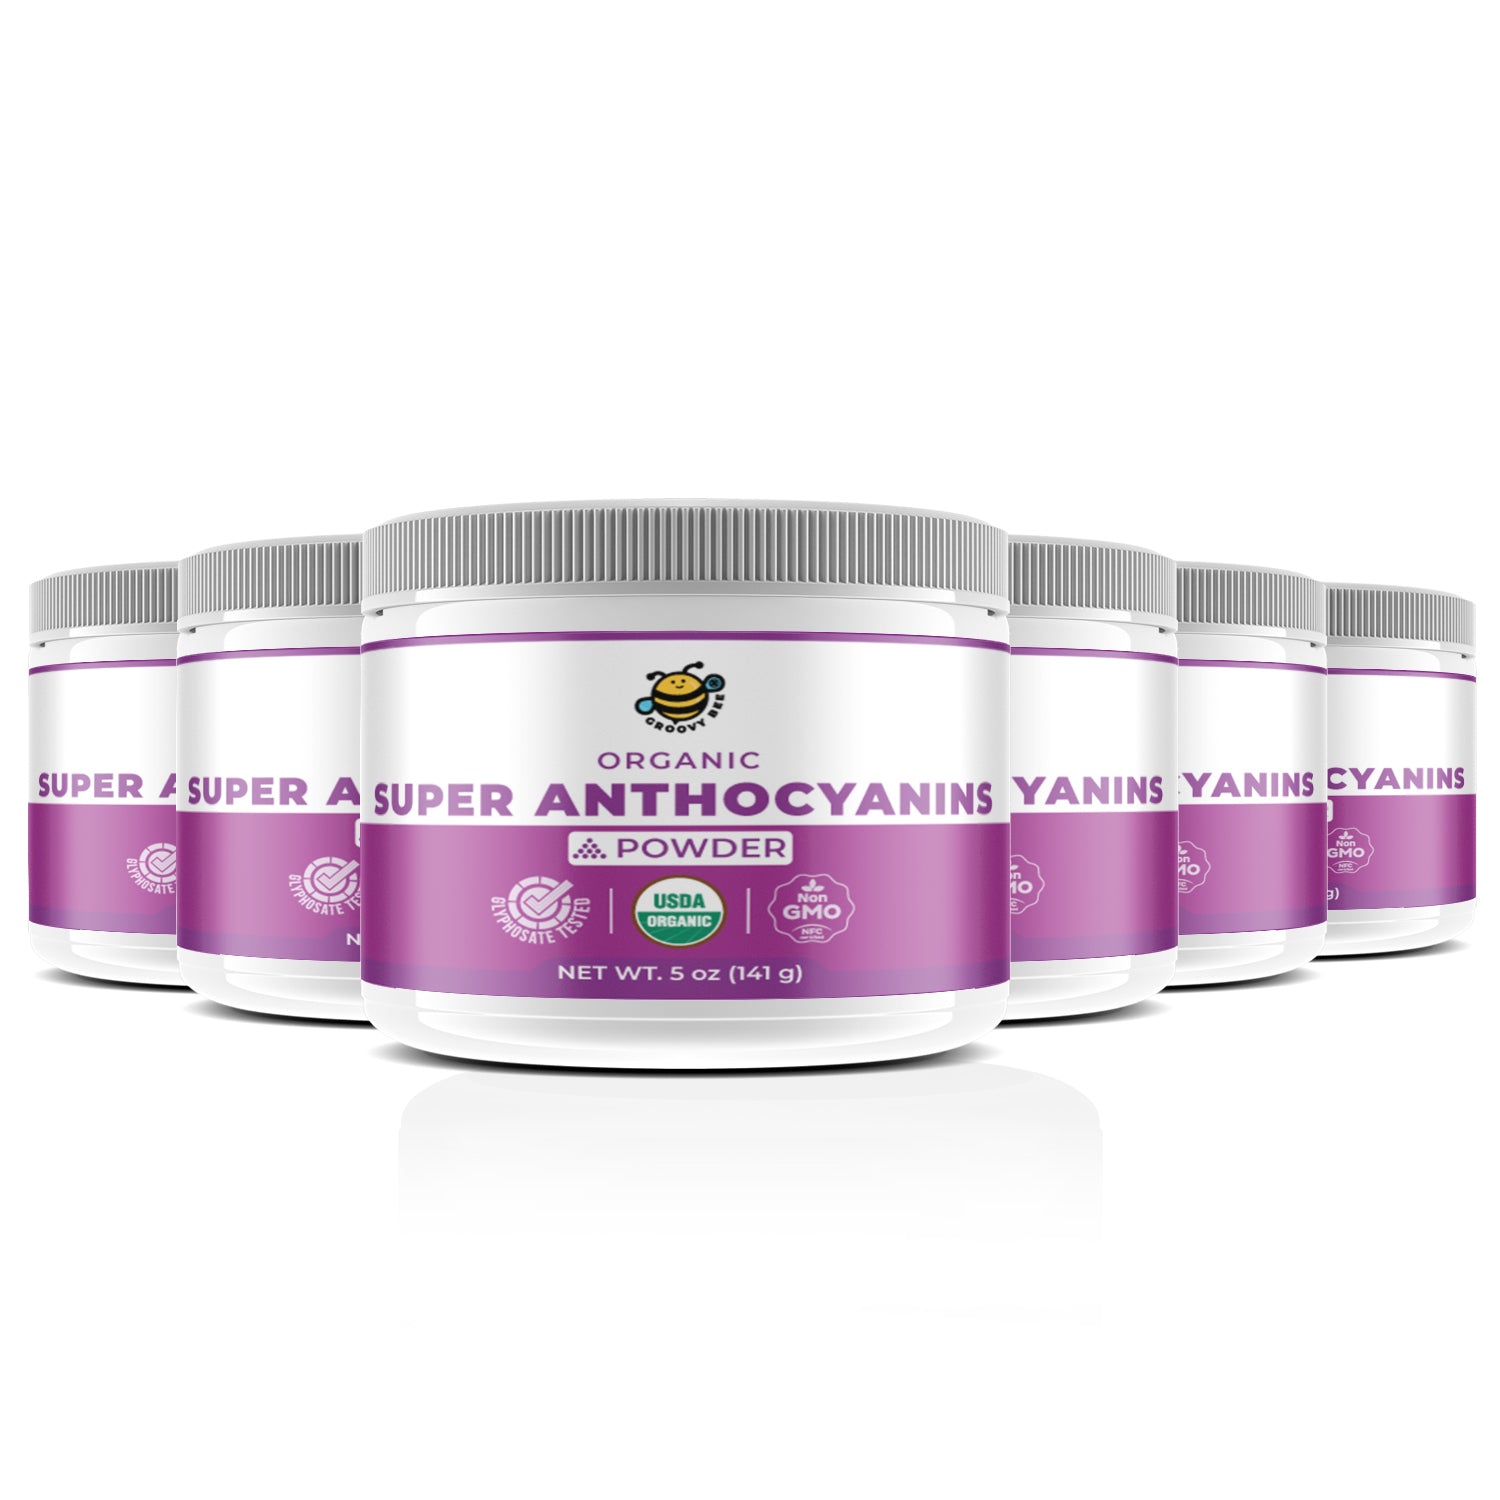 Organic Super Anthocyanins 5 oz (141g) (6-Pack)